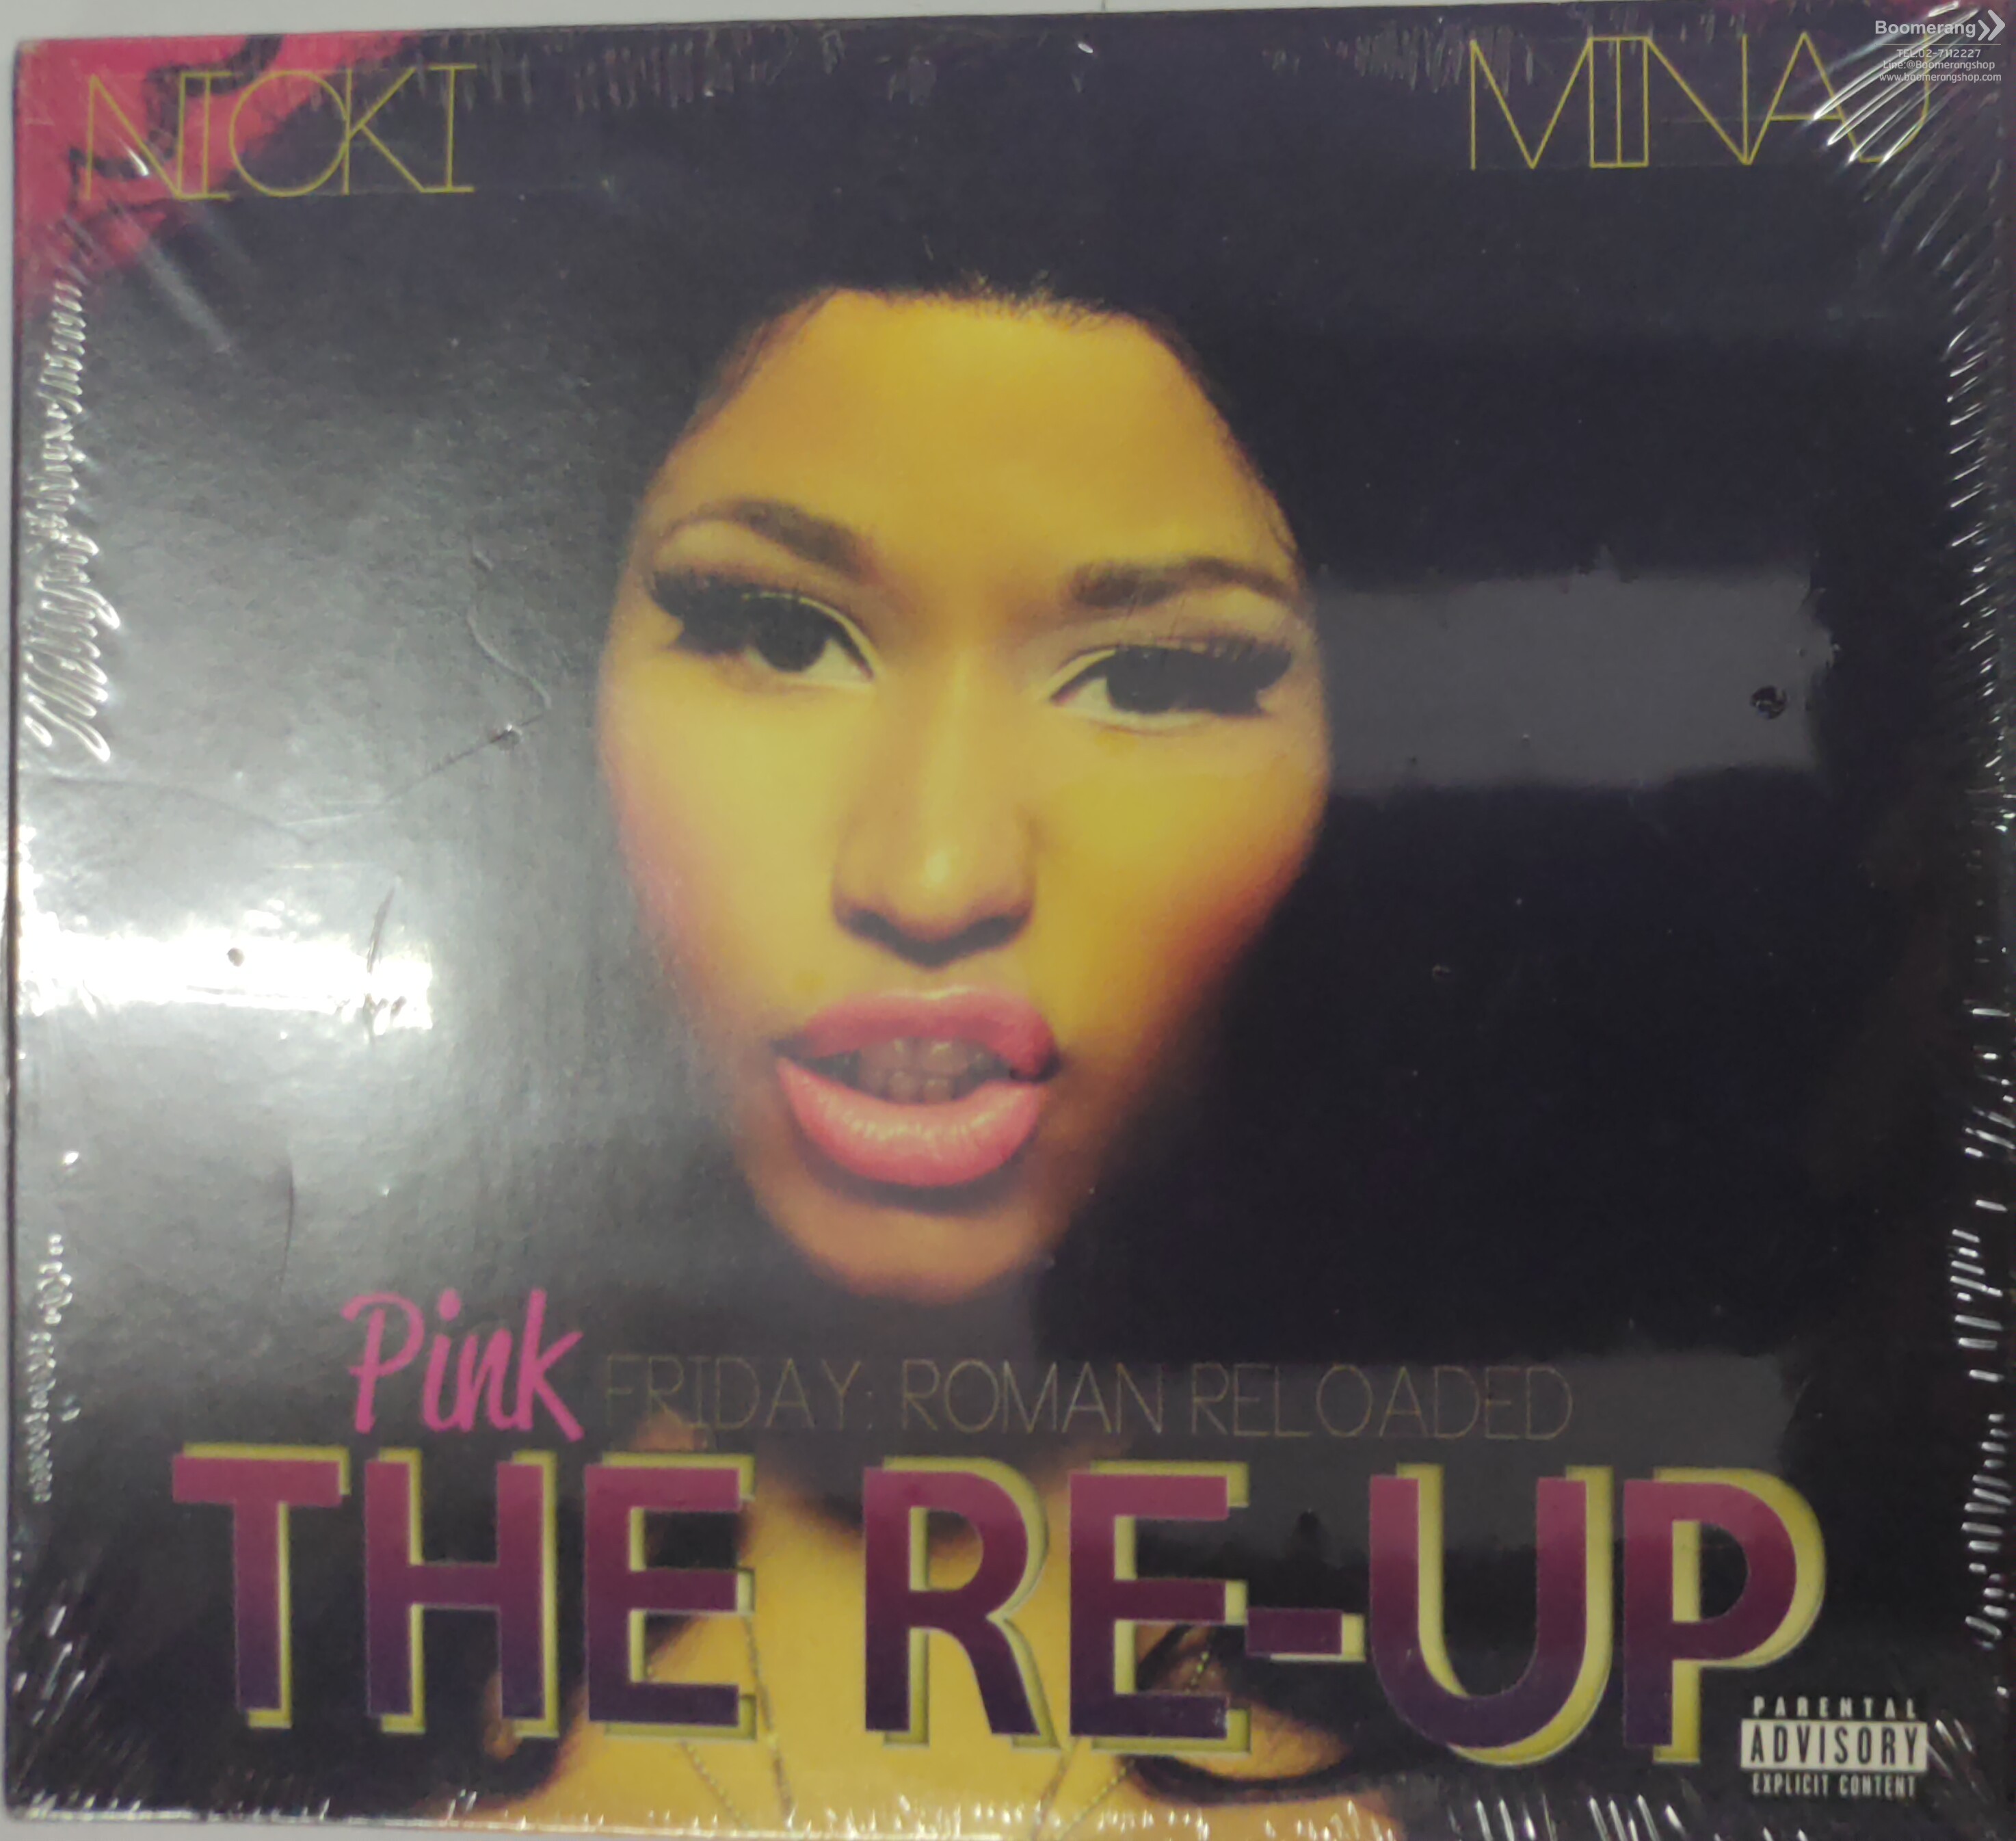 nicki minaj pink friday roman reloaded the re up album cover